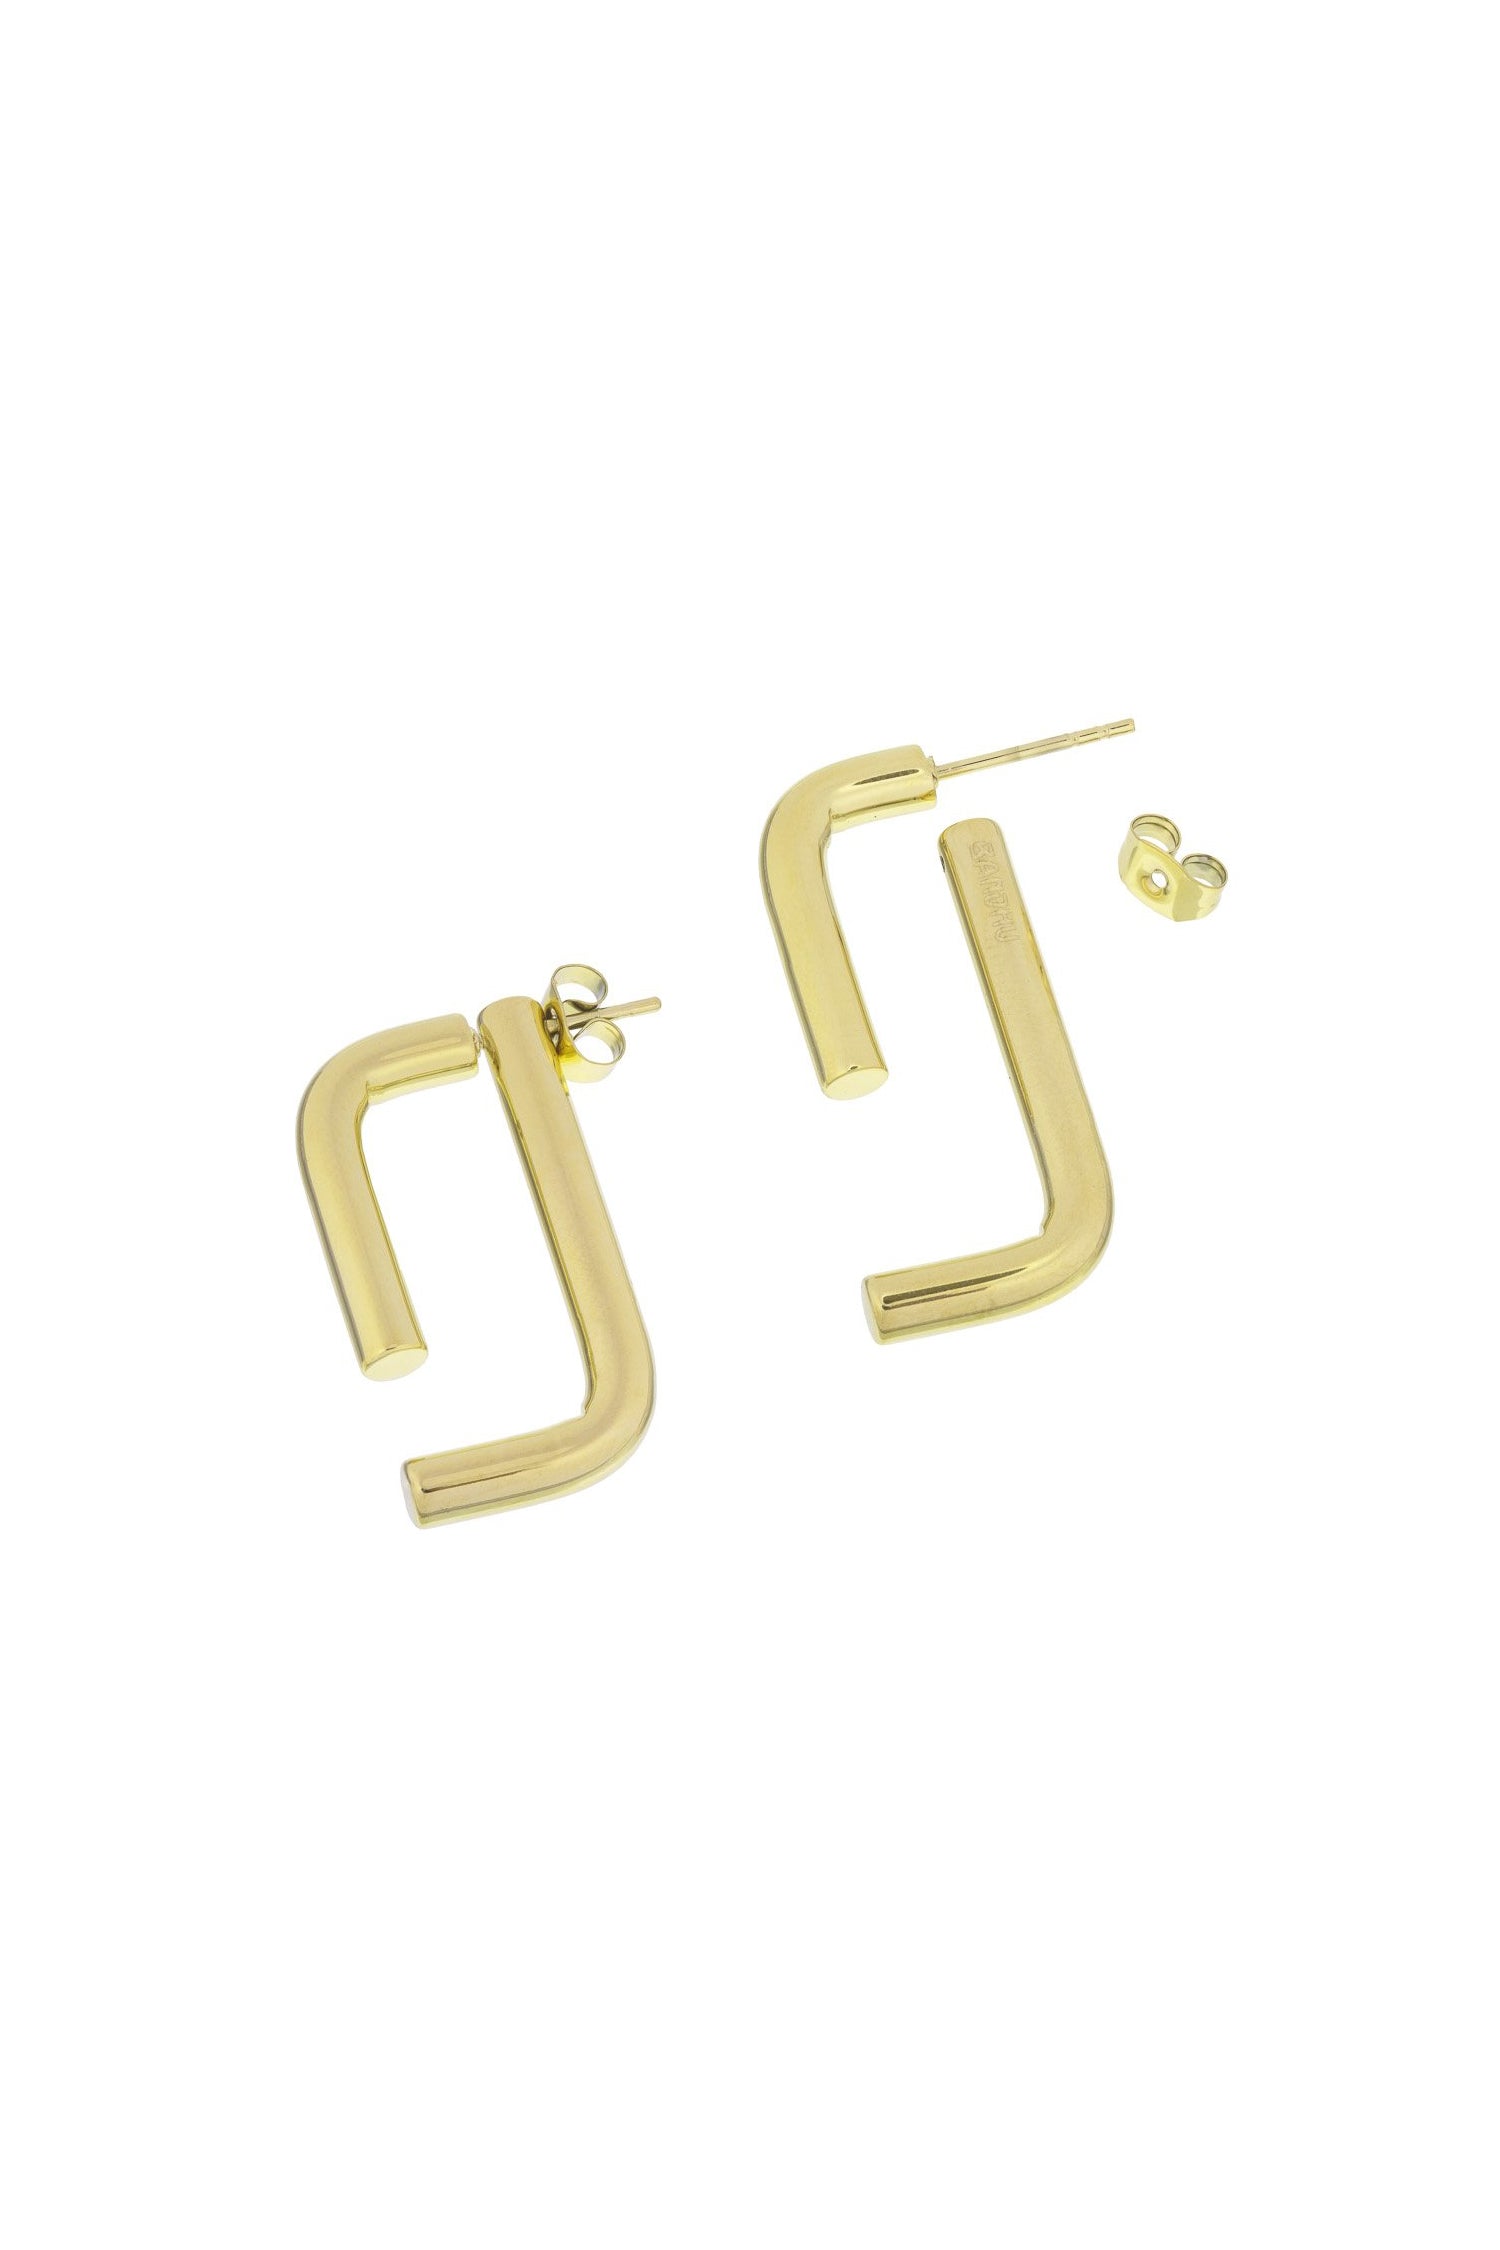 Linked Earrings - Gold